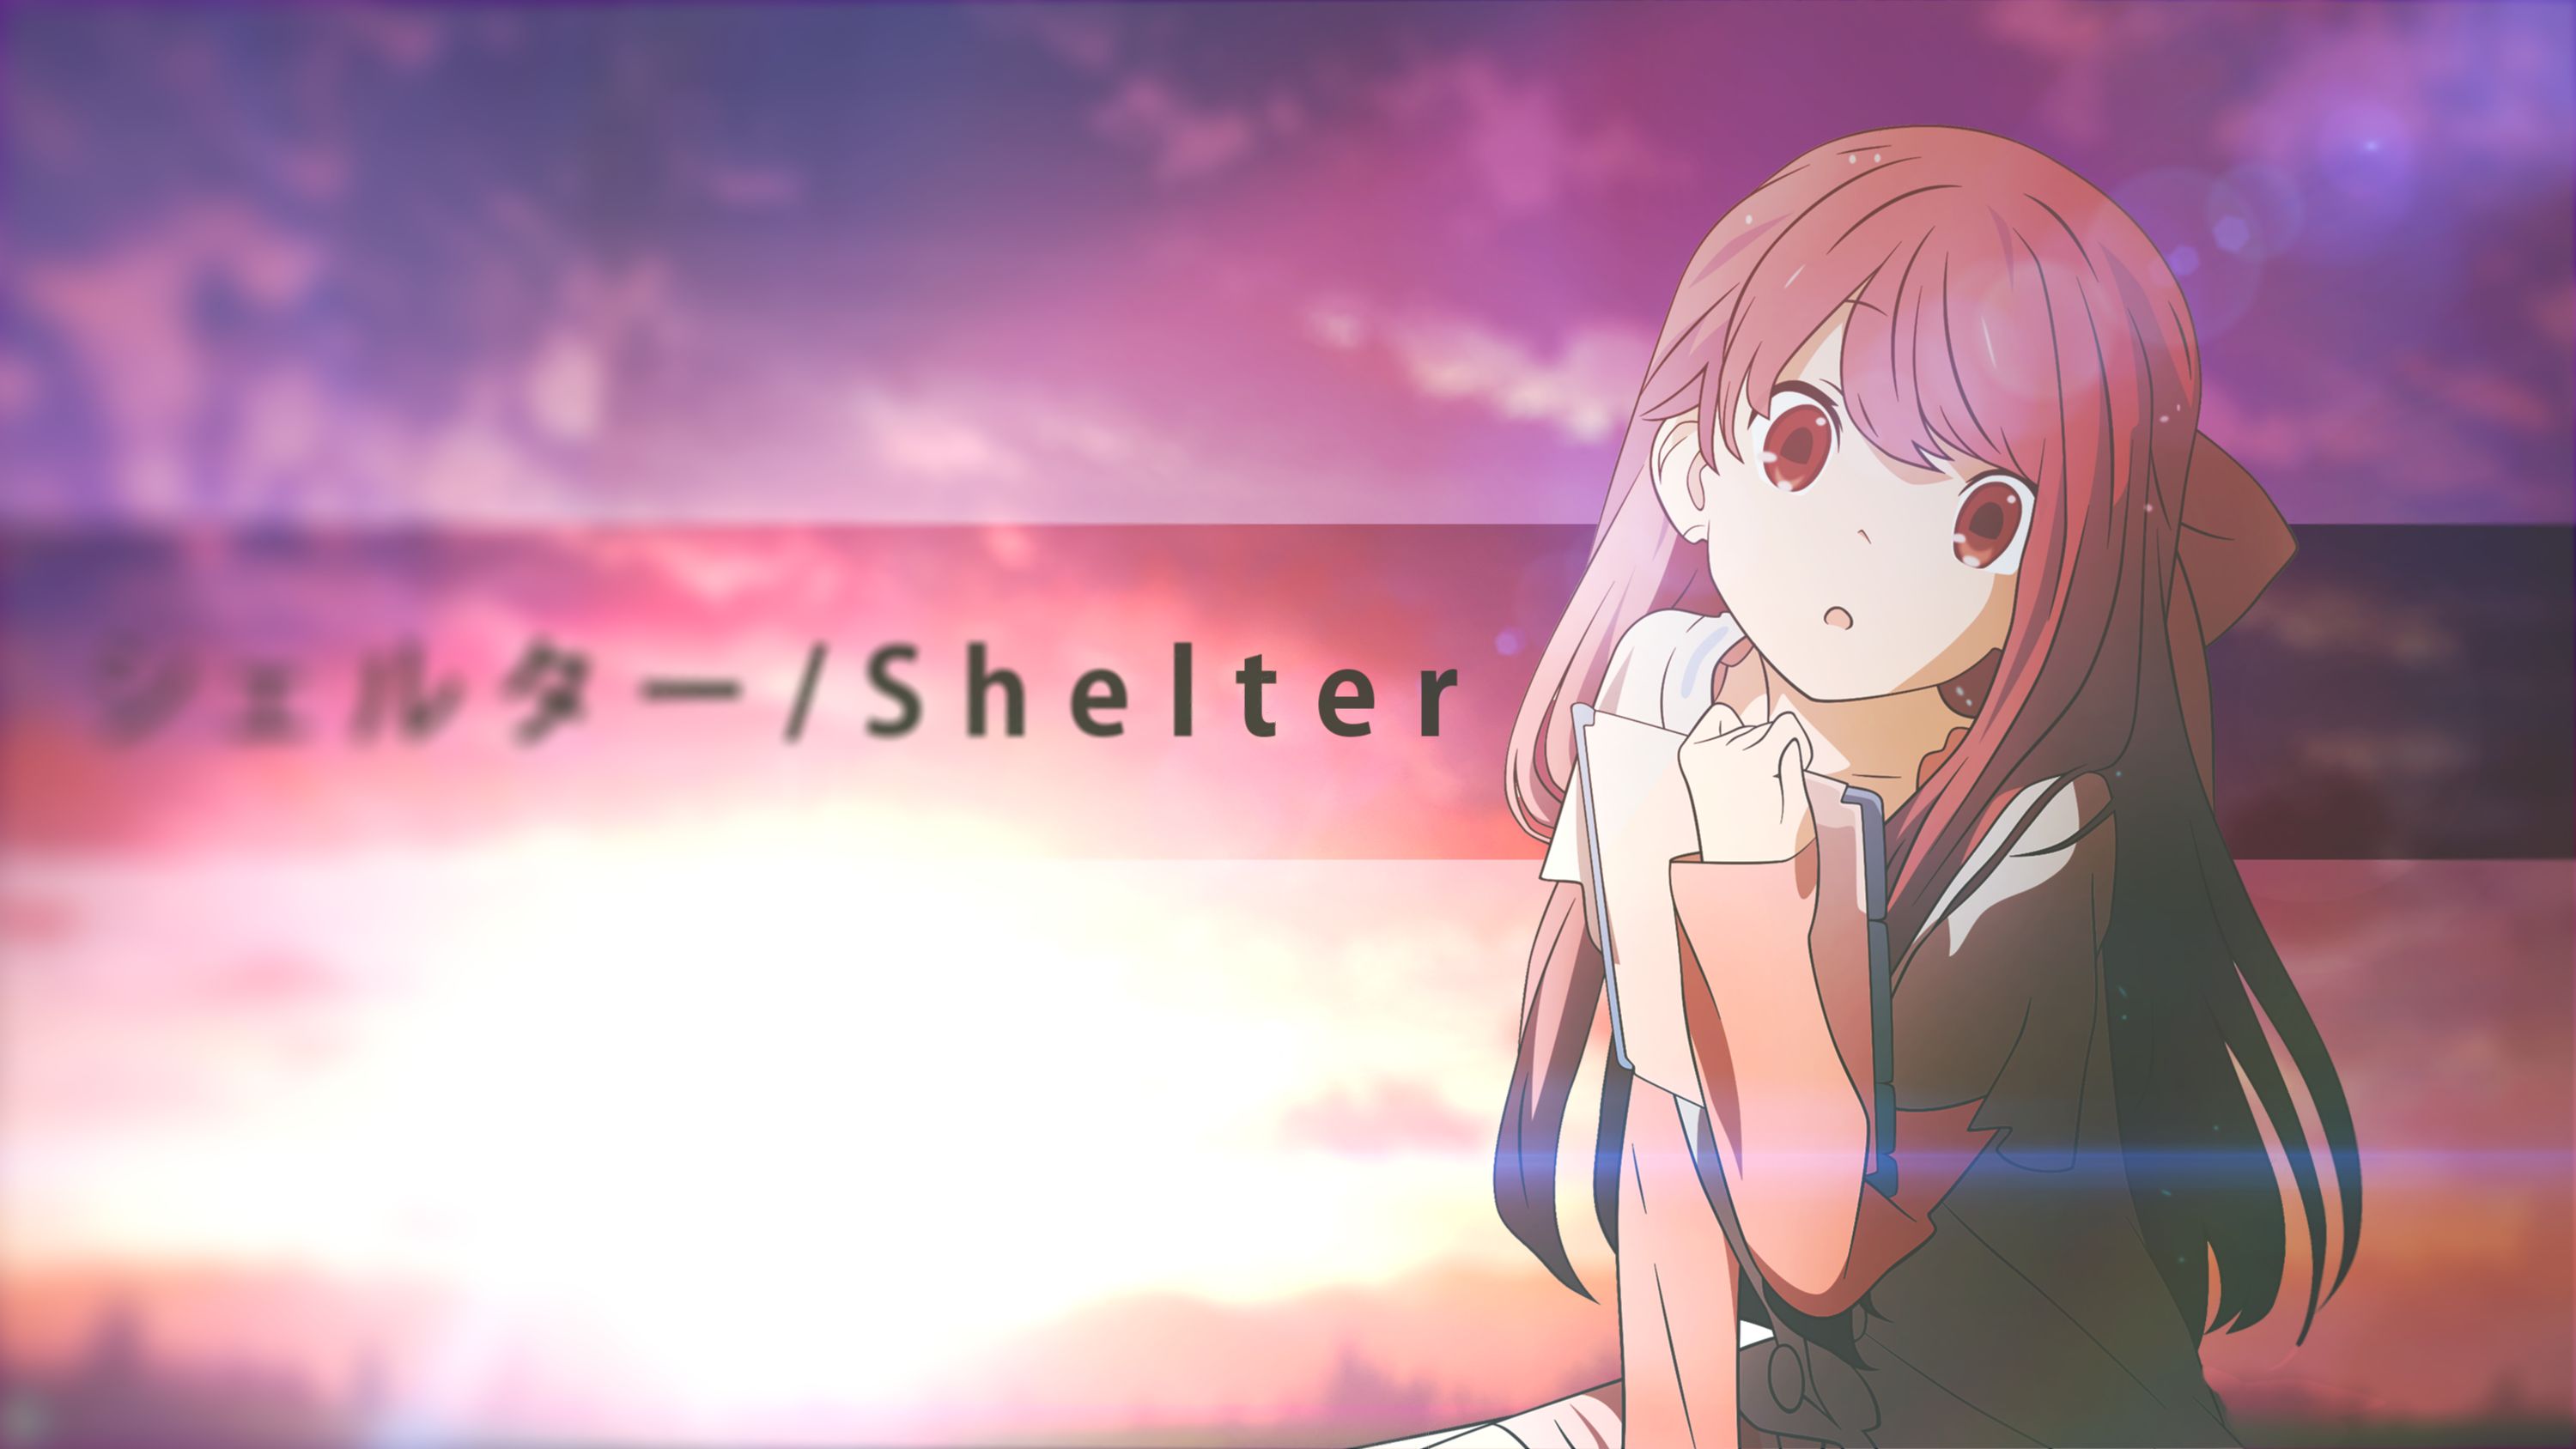 HD desktop wallpaper Anime Shelter Rin Shelter download free picture  810067